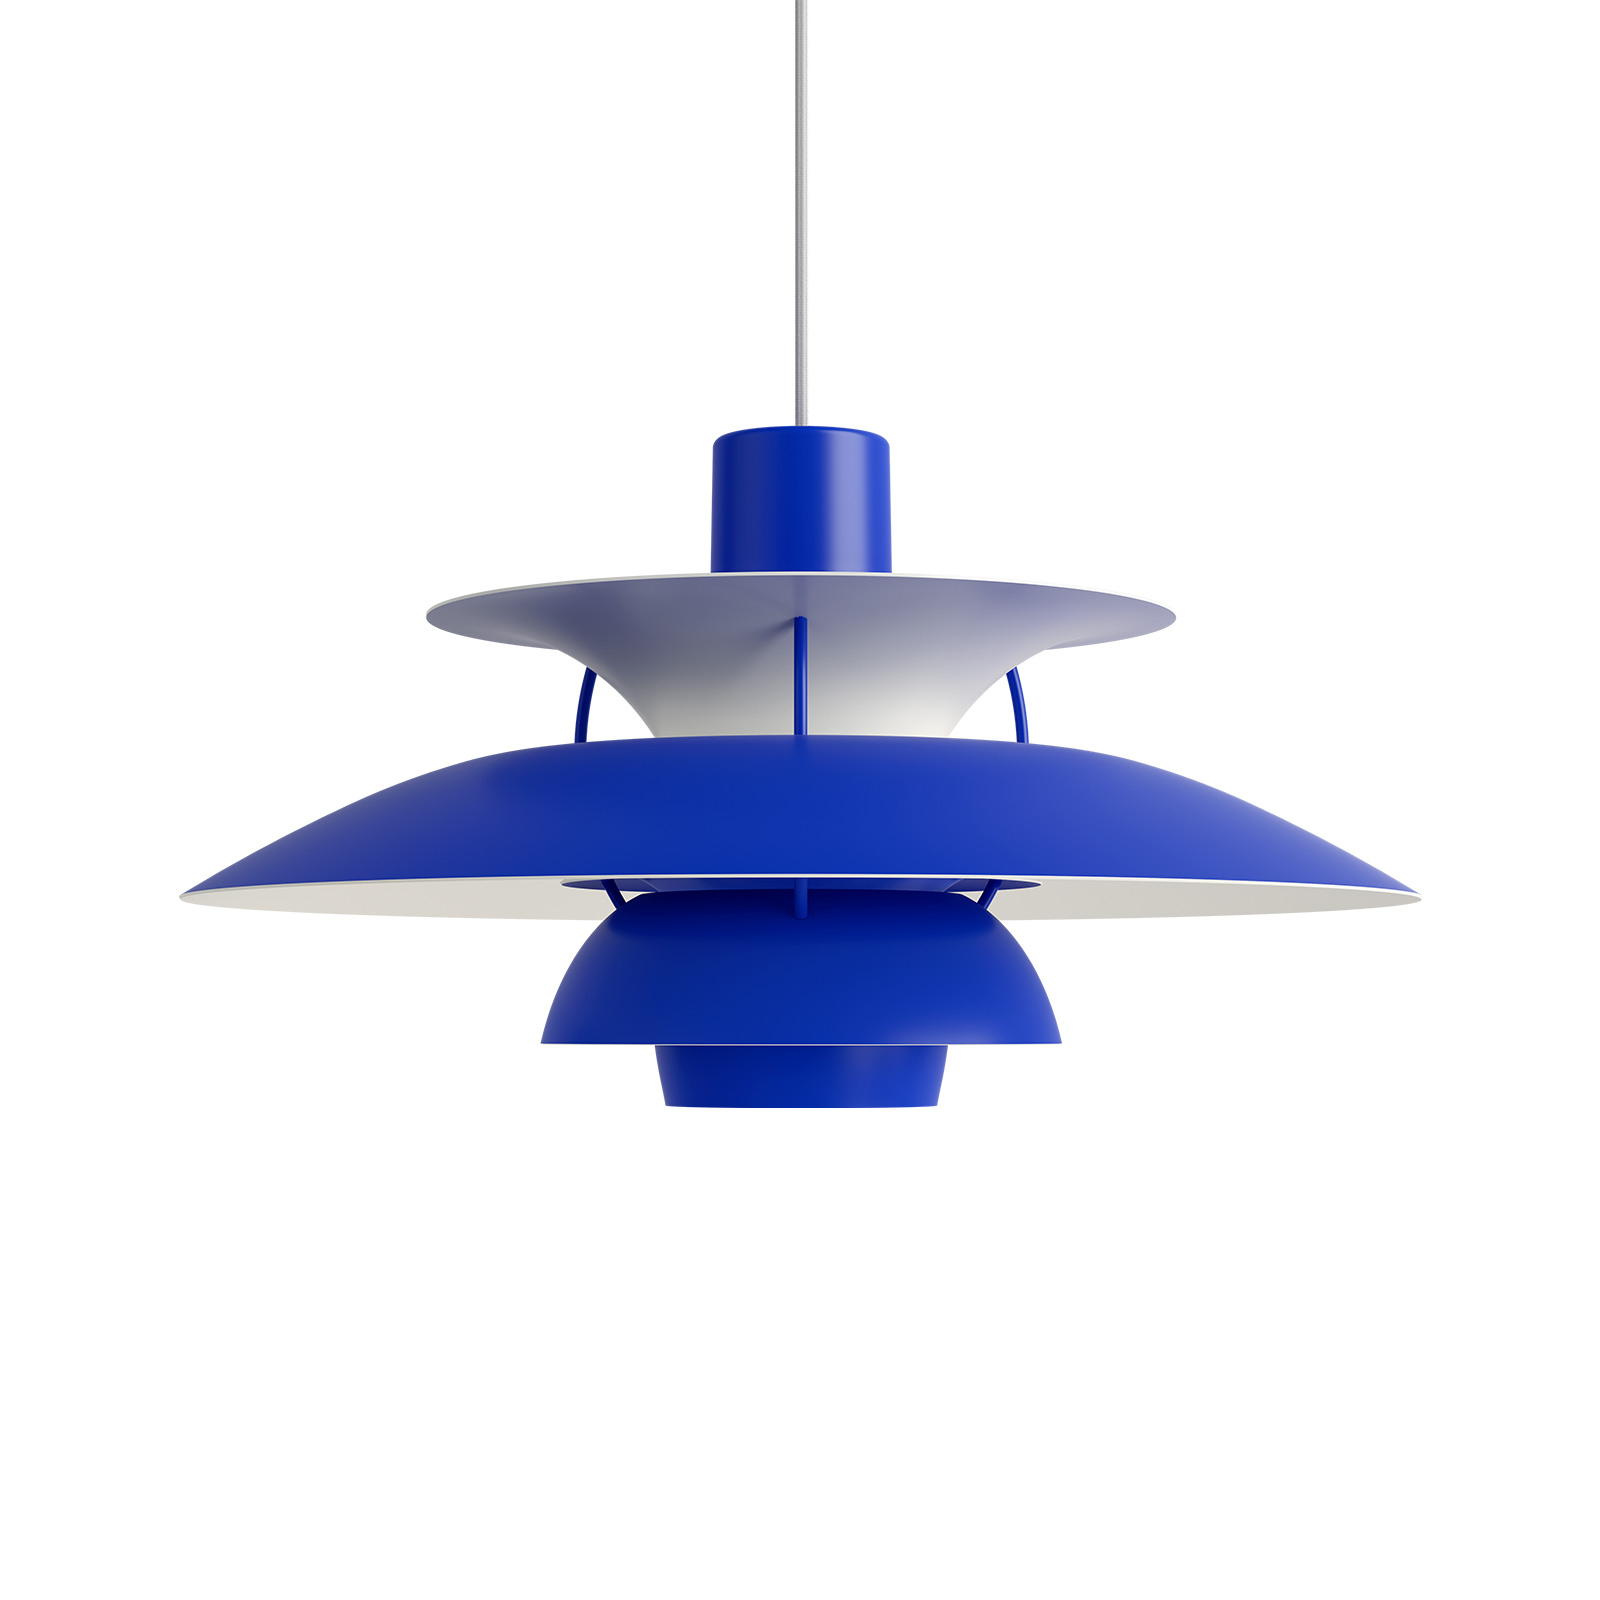 Louis Poulsen PH 5 hanging light, monochrome blue